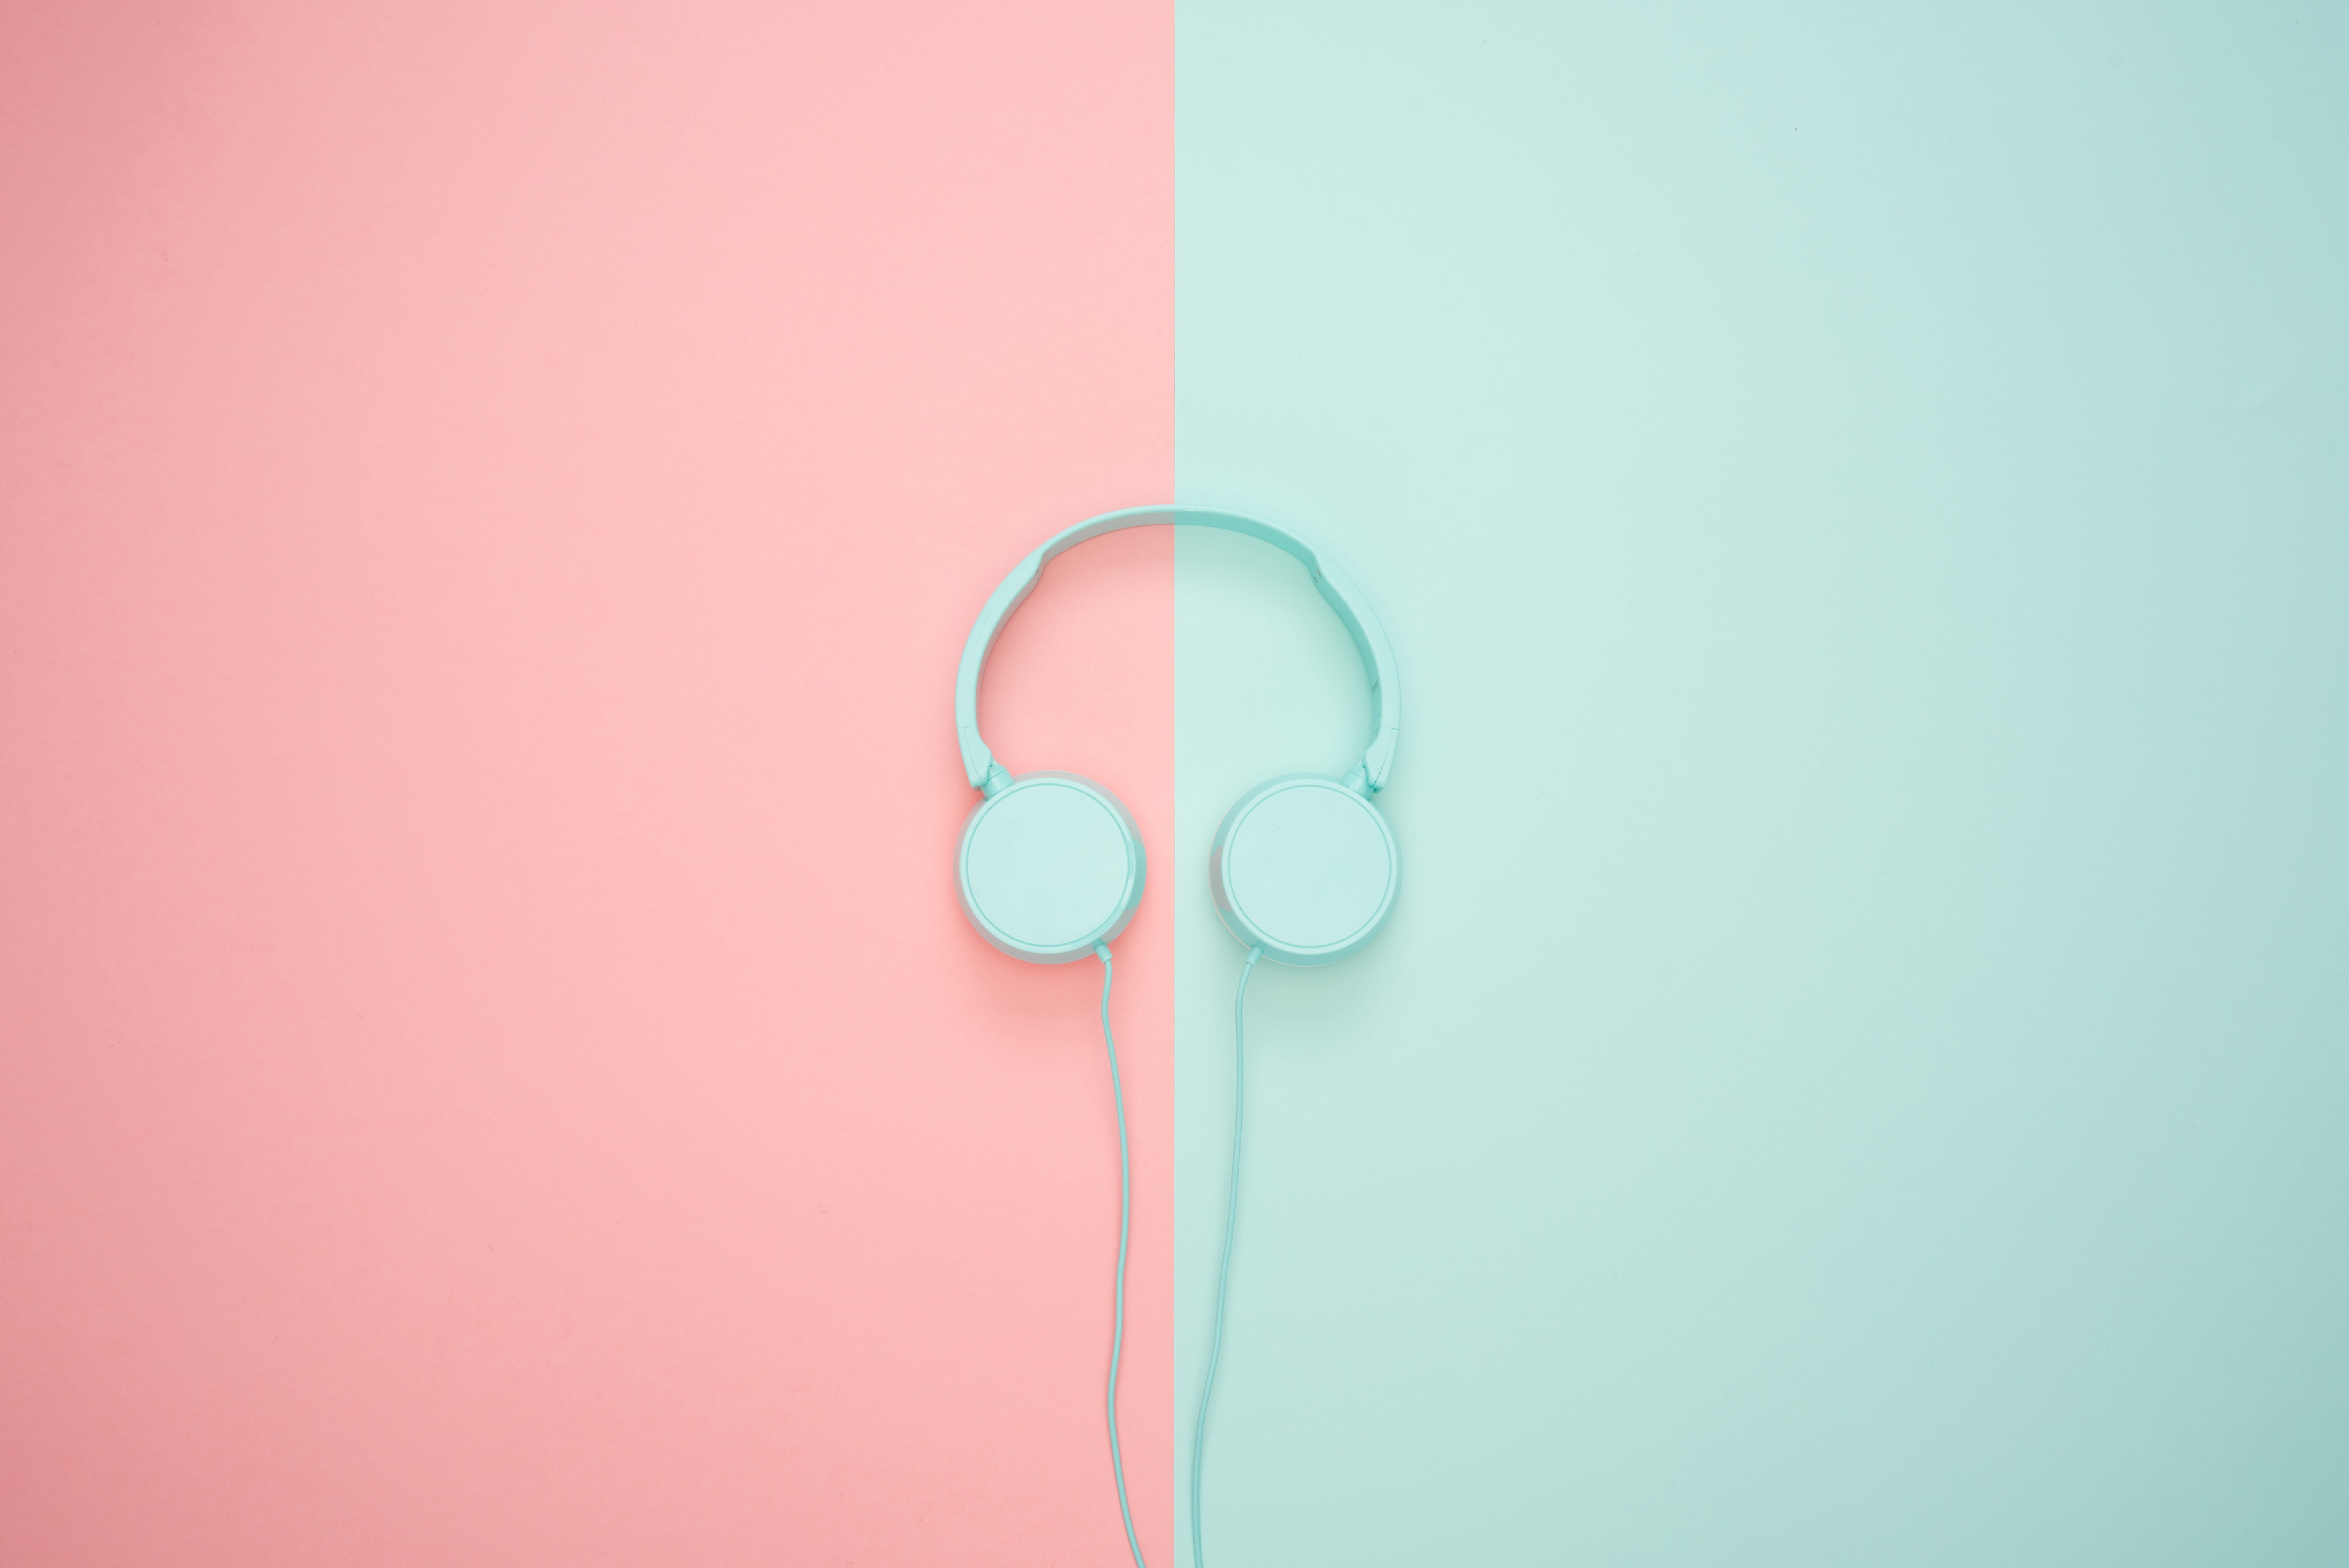 headphones, blue, pink, pastel colors, bright, flat lay, music